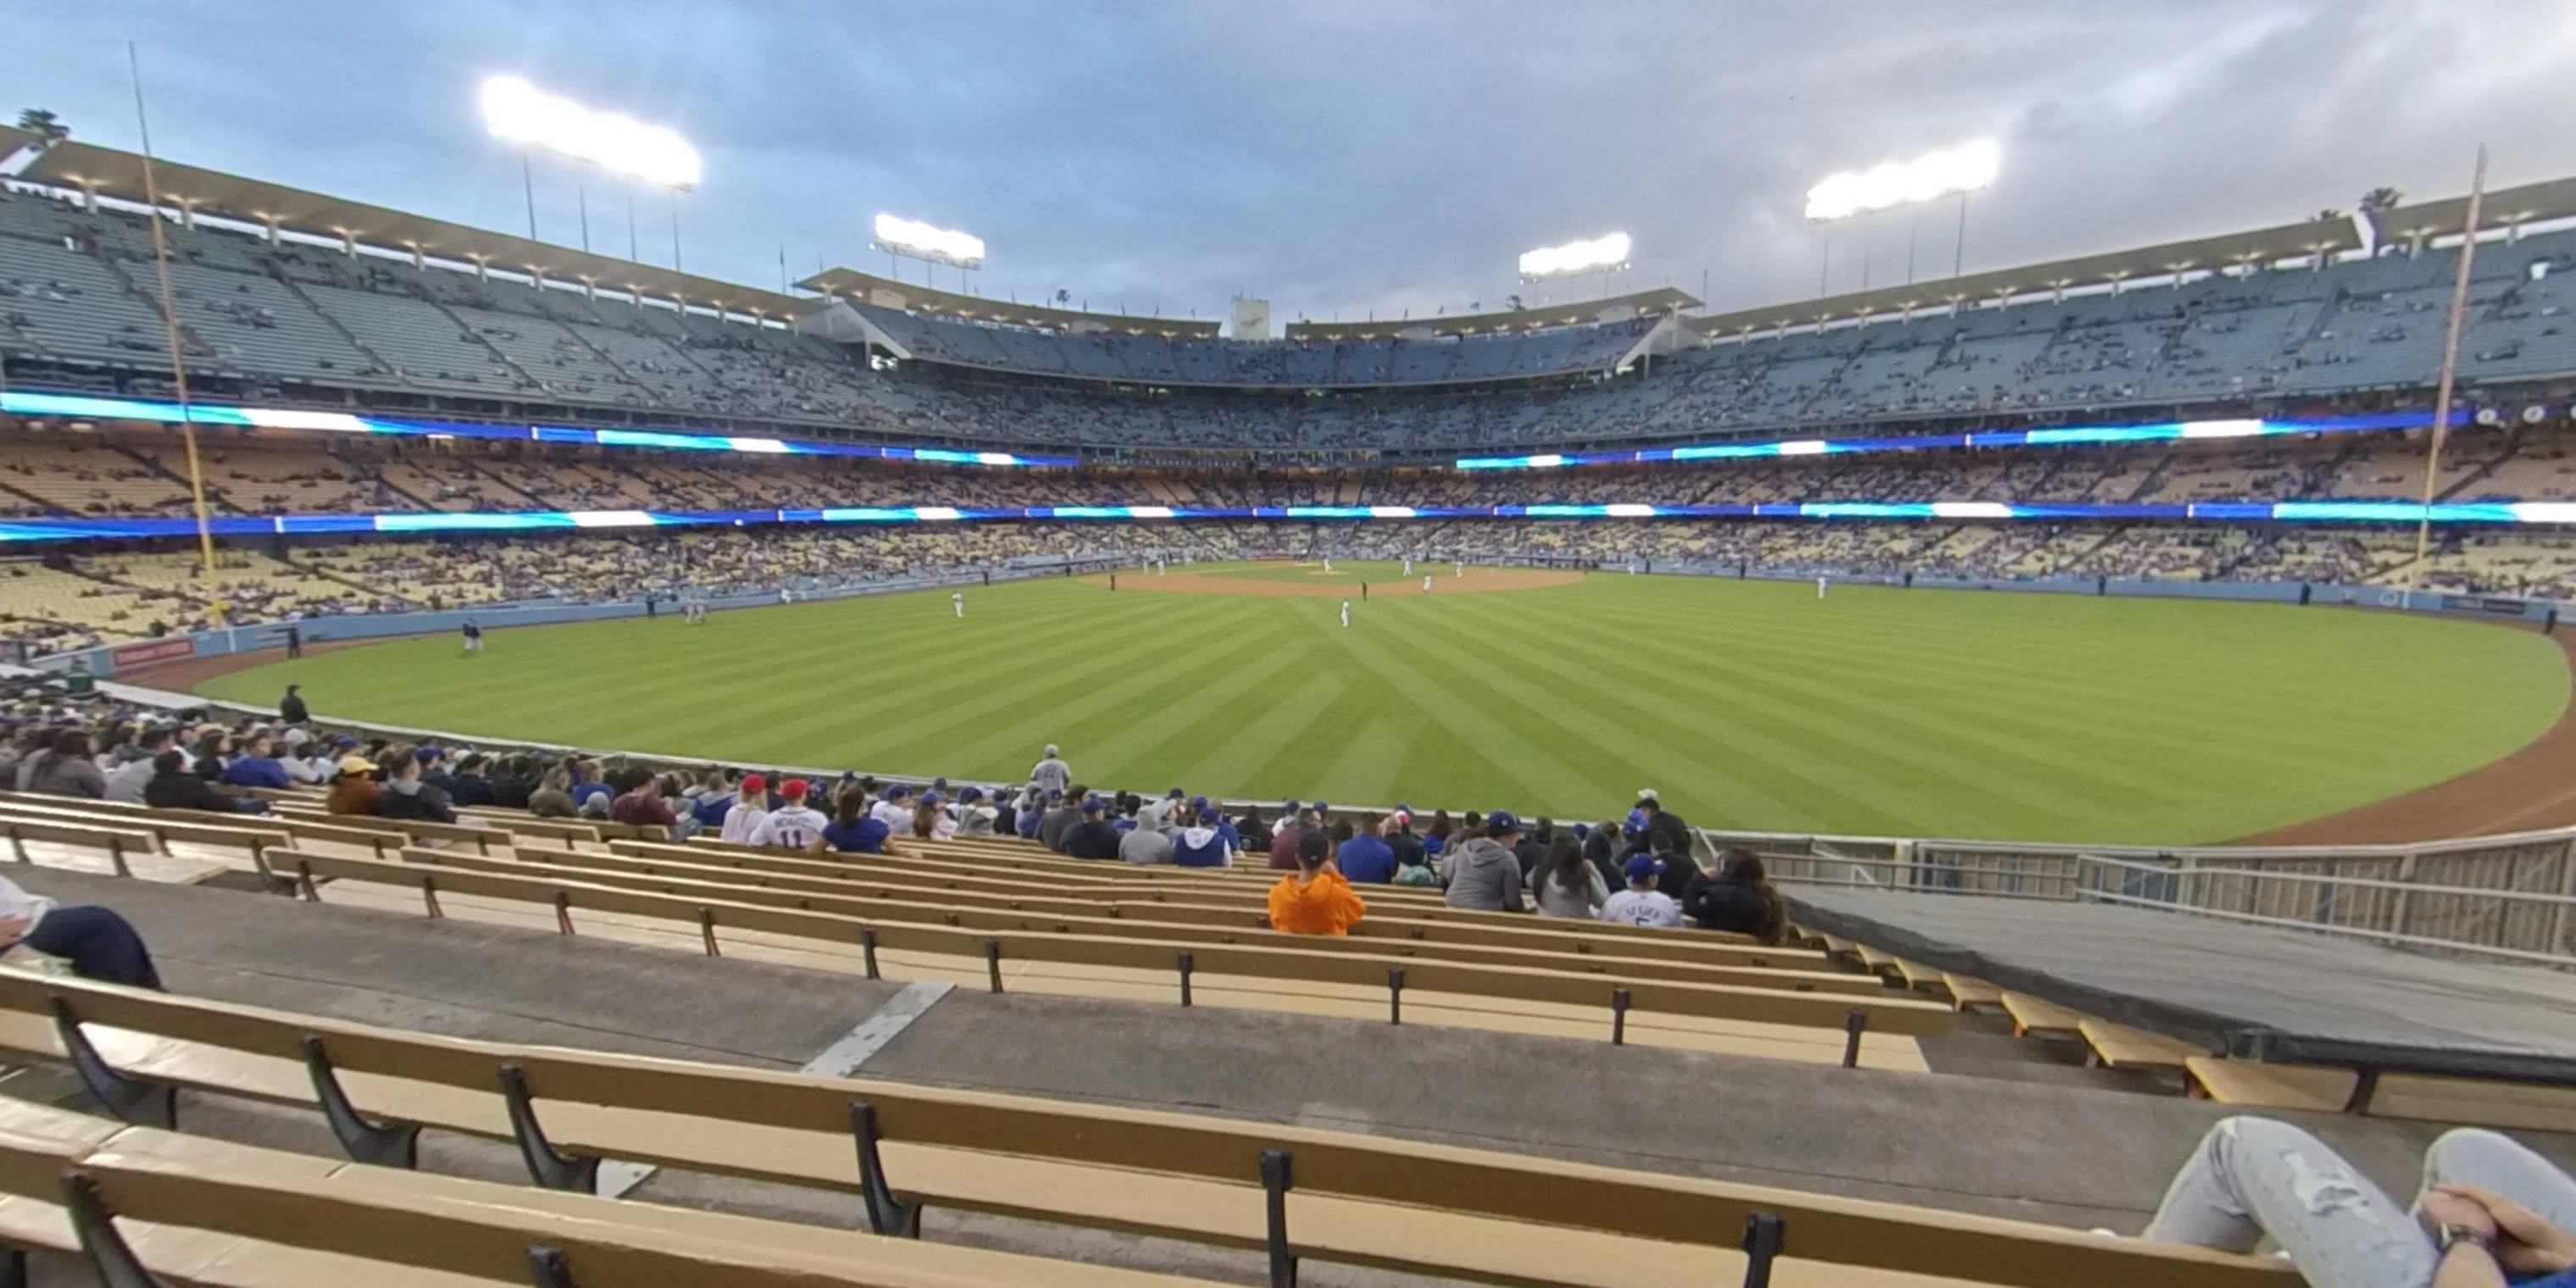 section 314 panoramic seat view  - dodger stadium